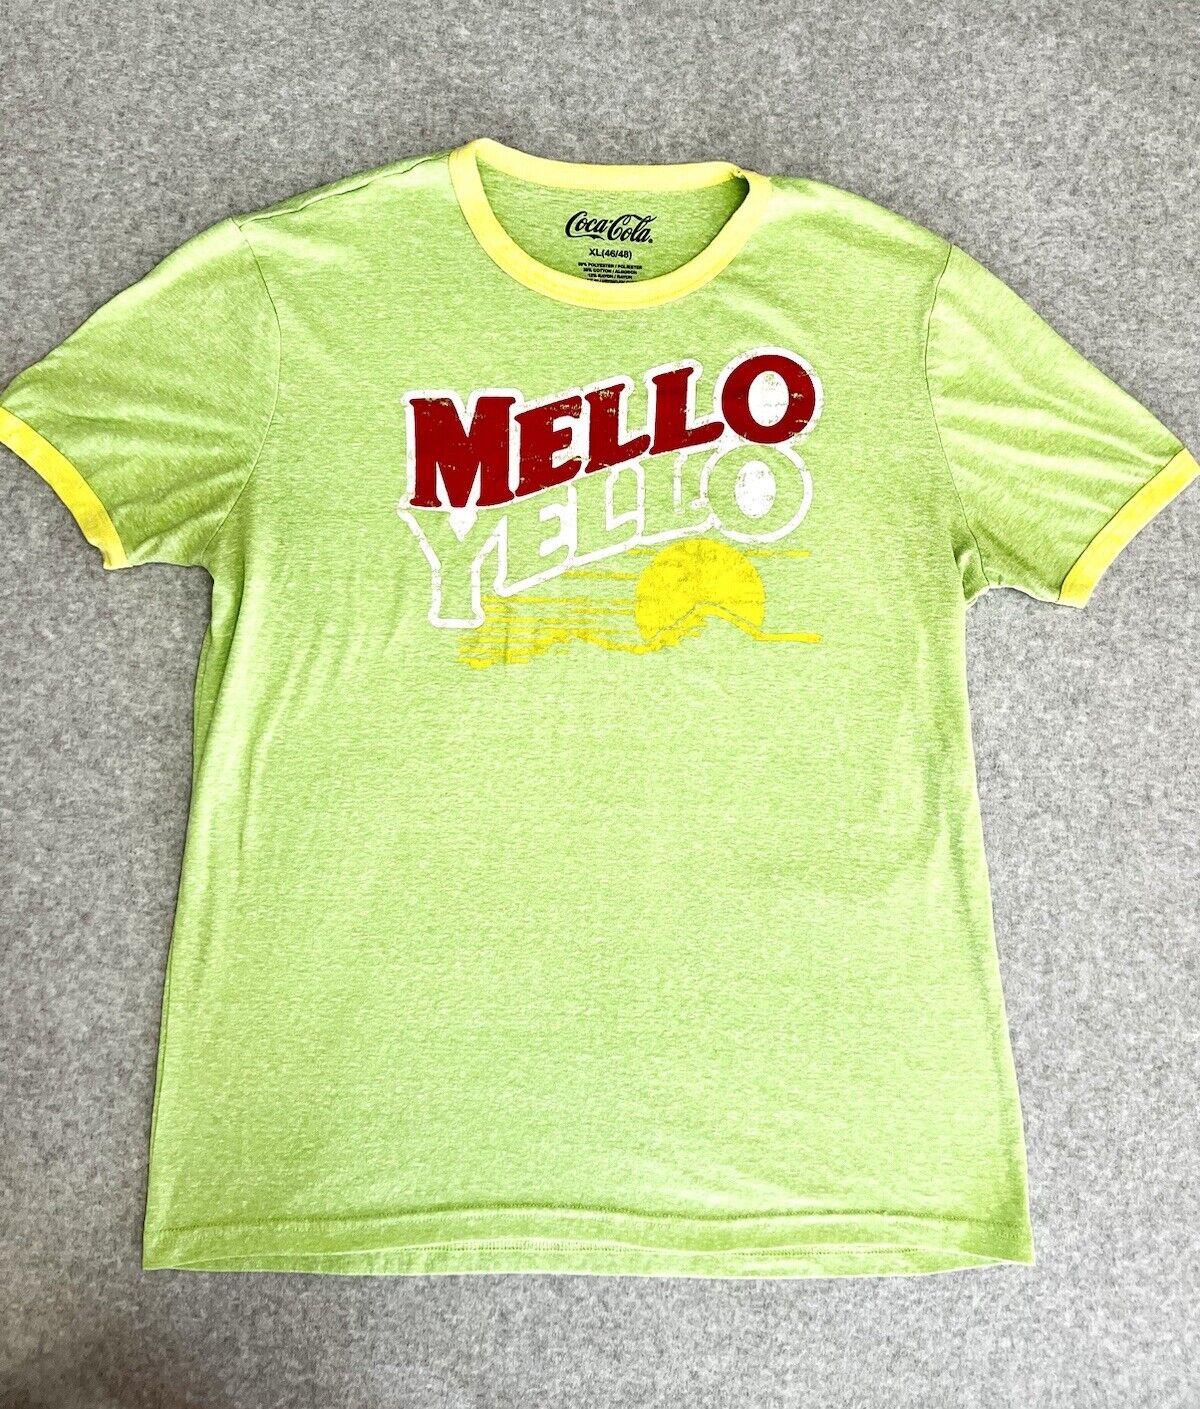 Classic Vintage Retro Mello Yellow Brand Coca-Cola Soda Ad T-Shirt Size X-Large